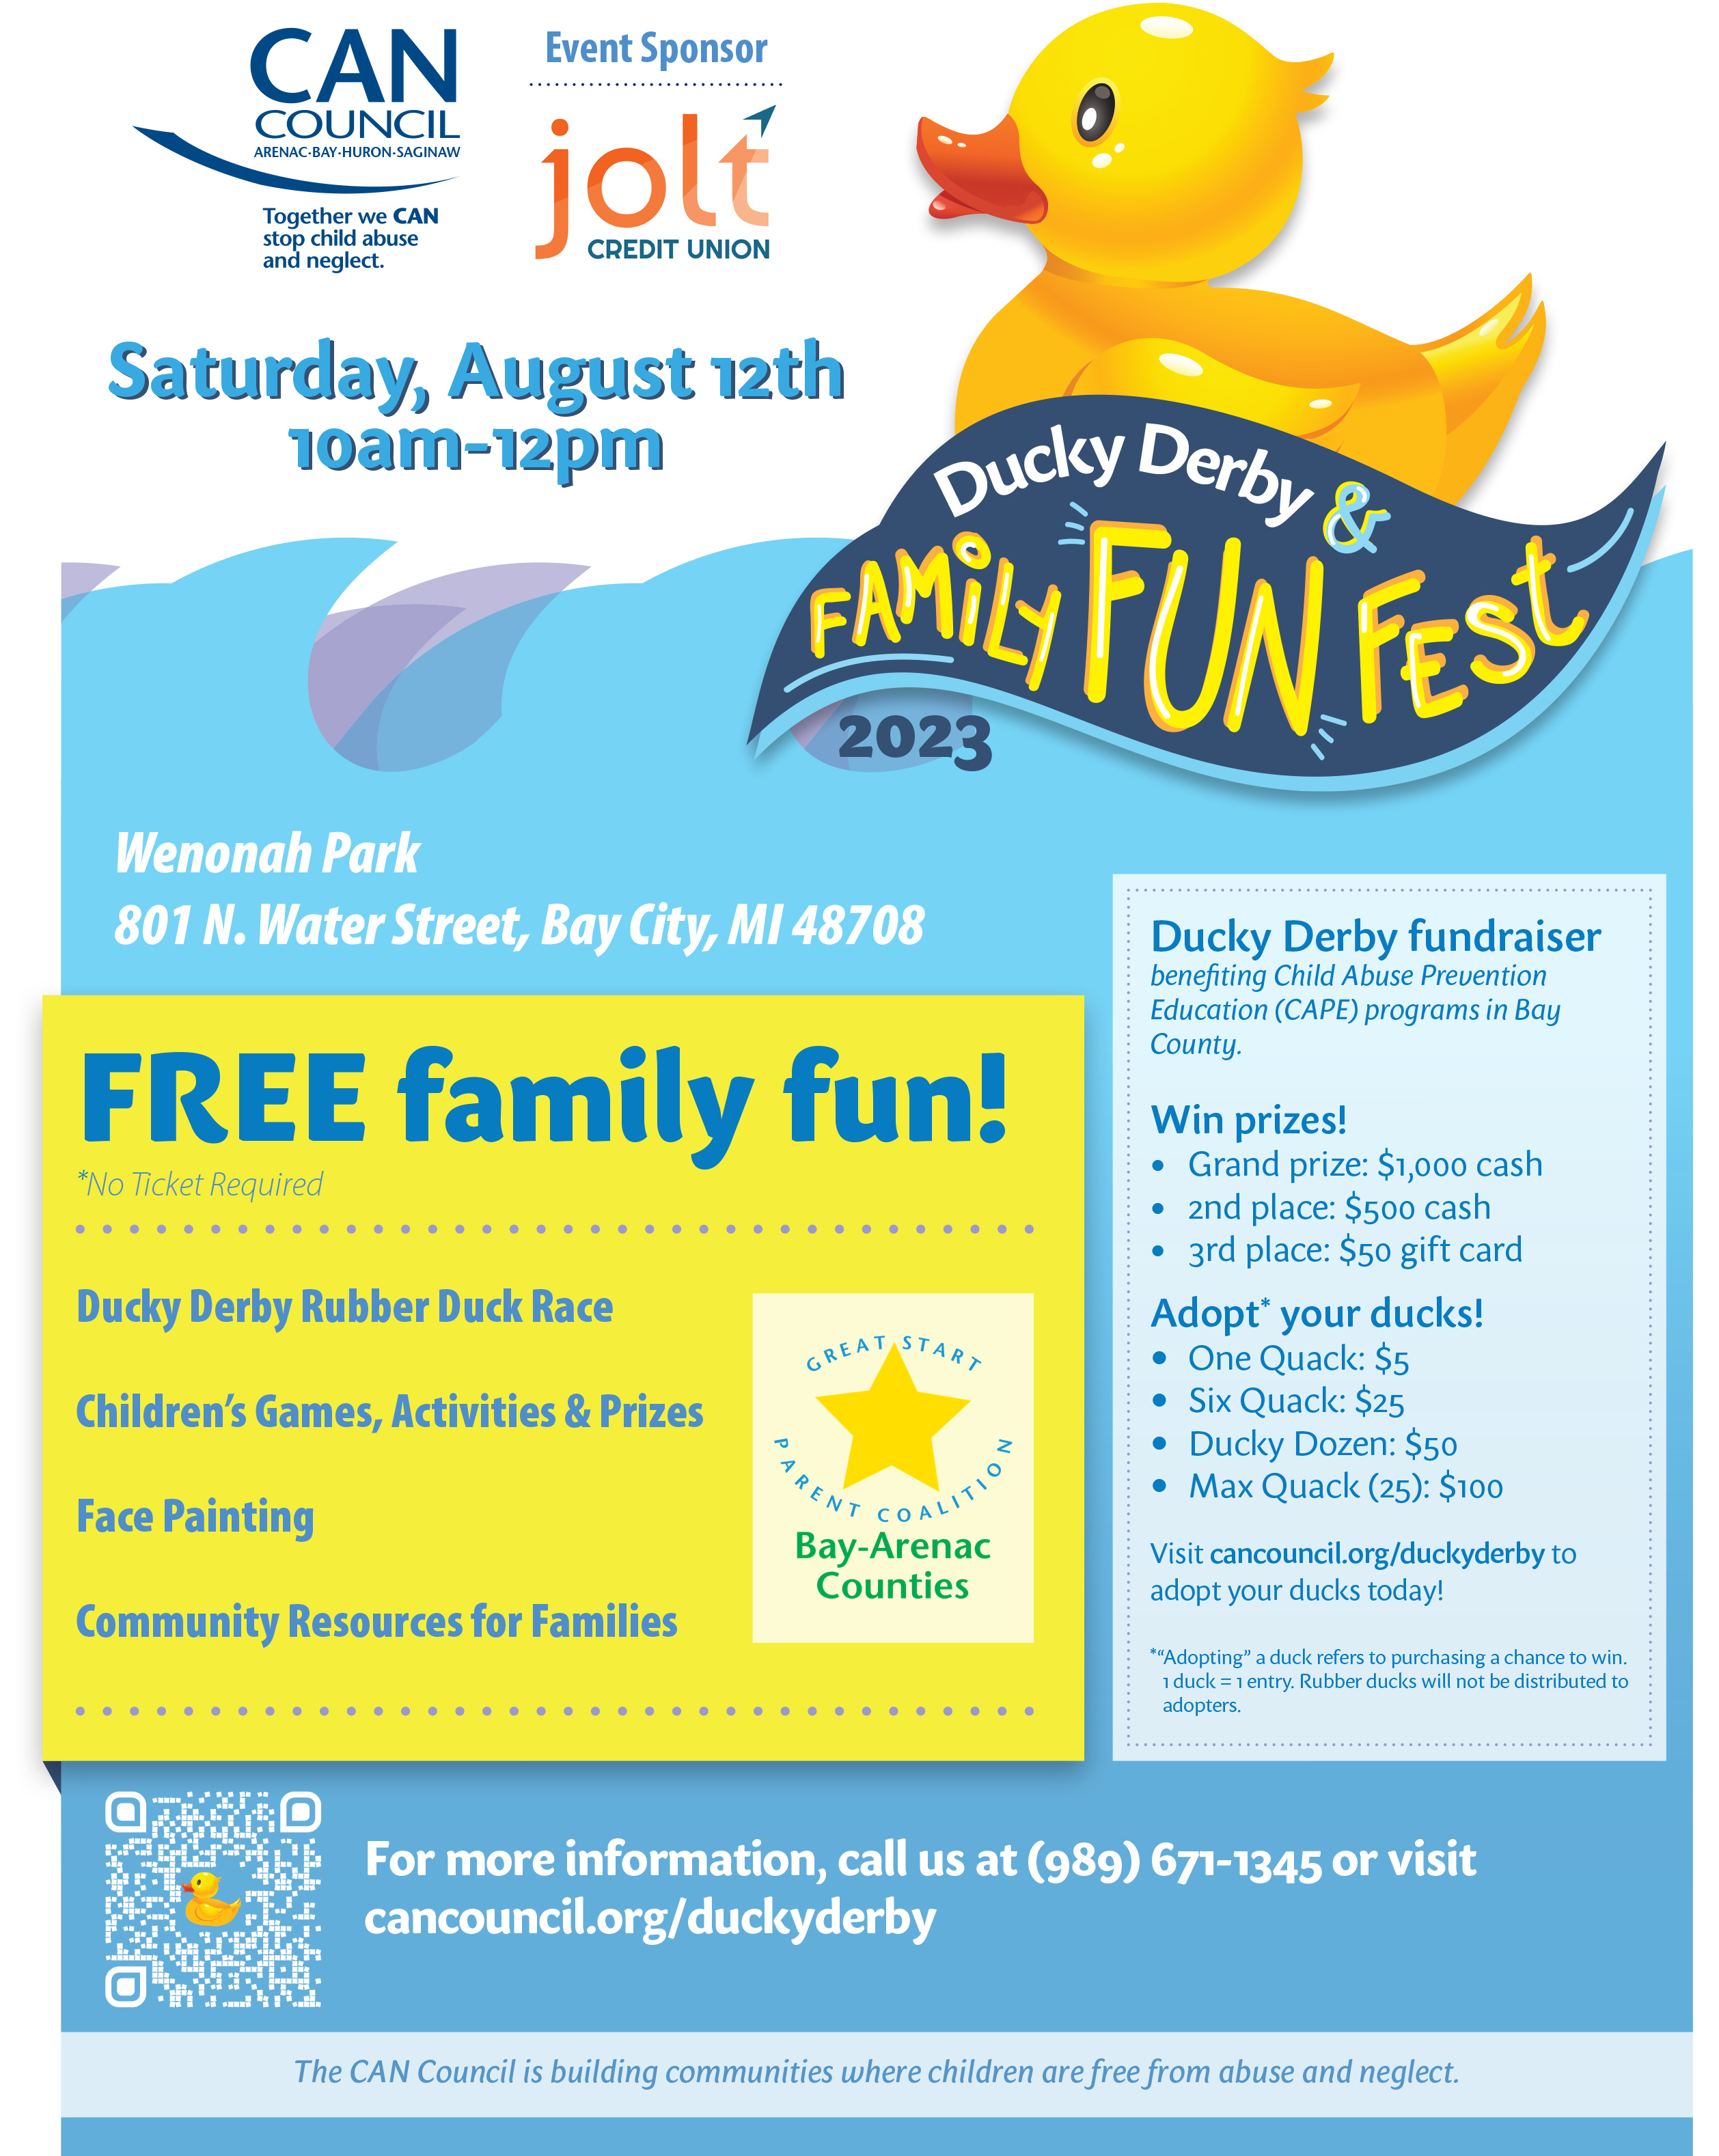 Ducky Derby & Family Fun Fest - August 12th